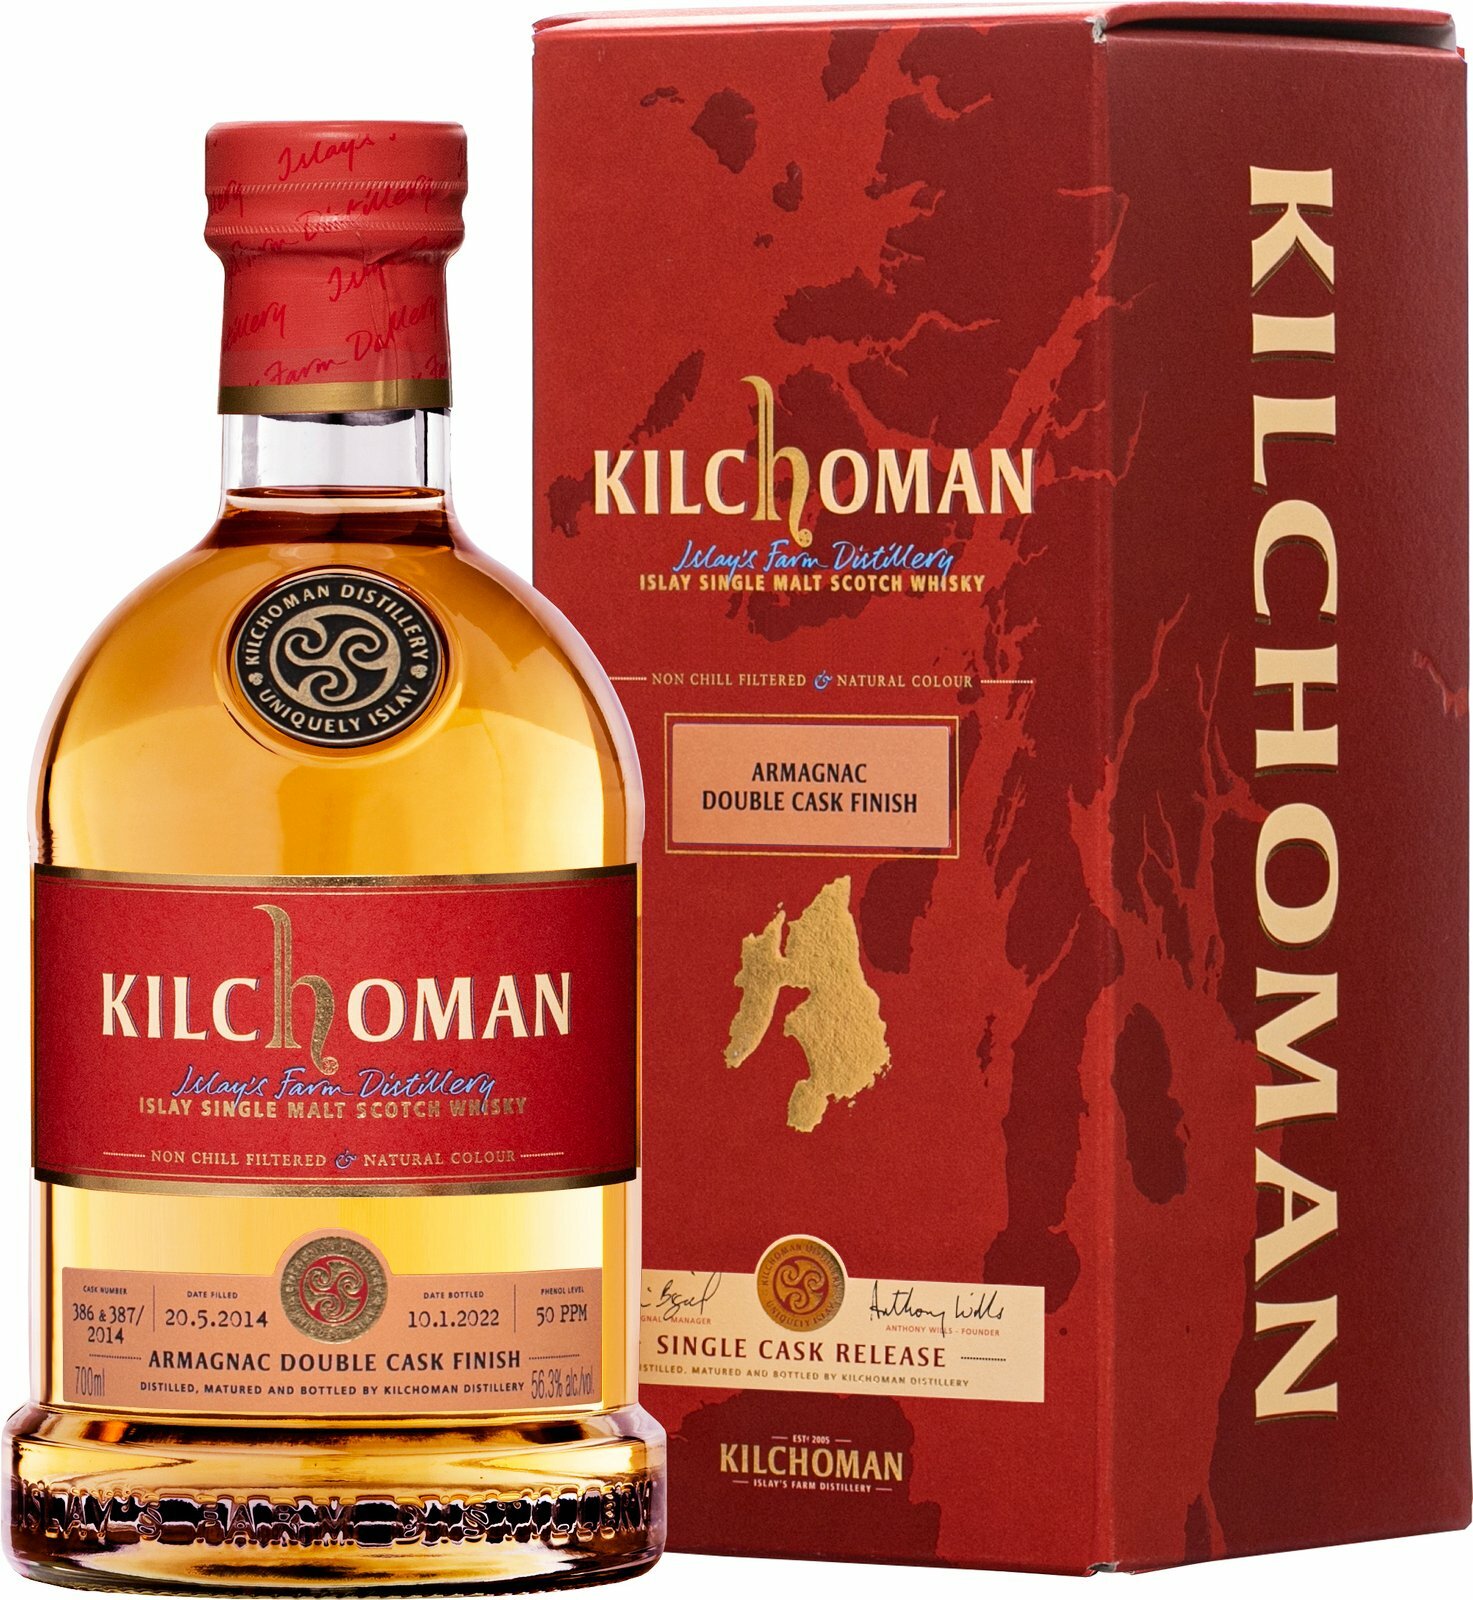 Kilchoman Armagnac Double Cask Finish #386 & 387/2014, GIFT